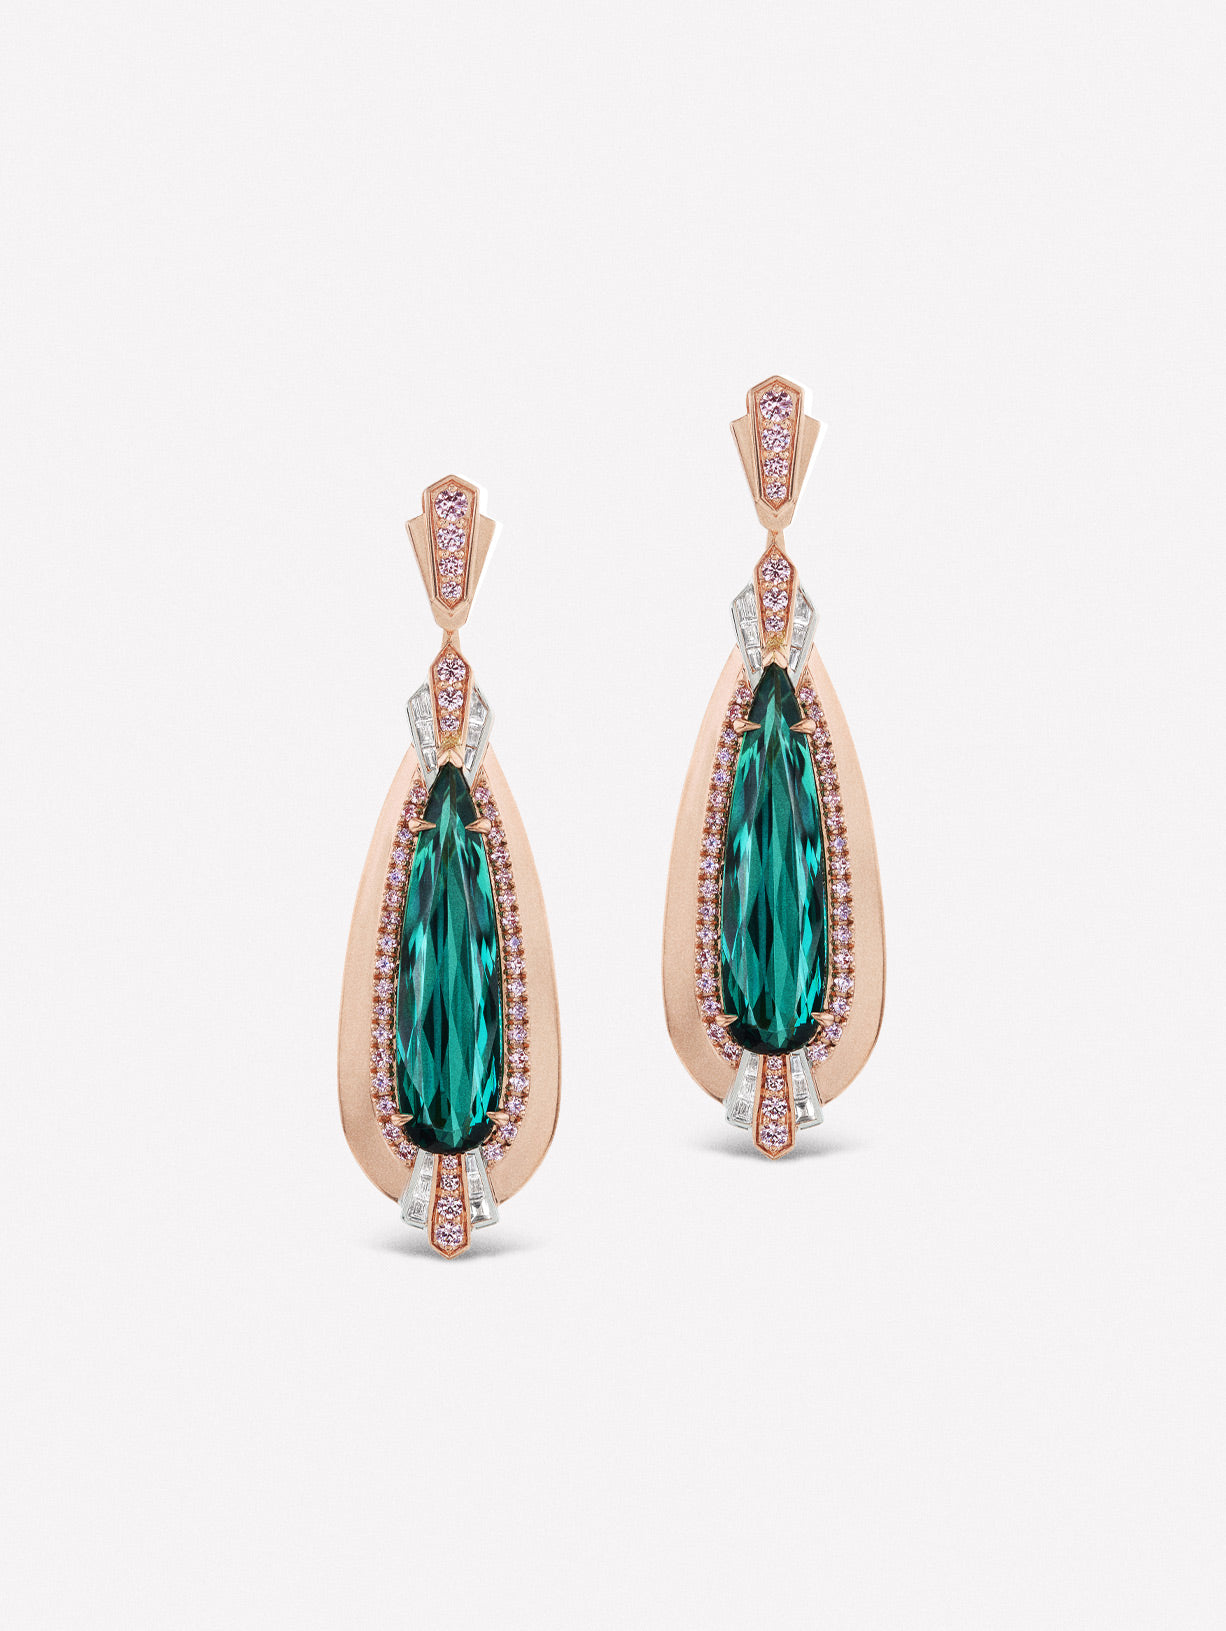 Argyle Pink™ Diamonds and Green Tourmaline Earrings - Pink Diamonds, J FINE - J Fine, Earrings - Pink Diamond Jewelry, argyle-pink™-diamond-and-green-tourmaline-earrings-by-j-fine - Argyl